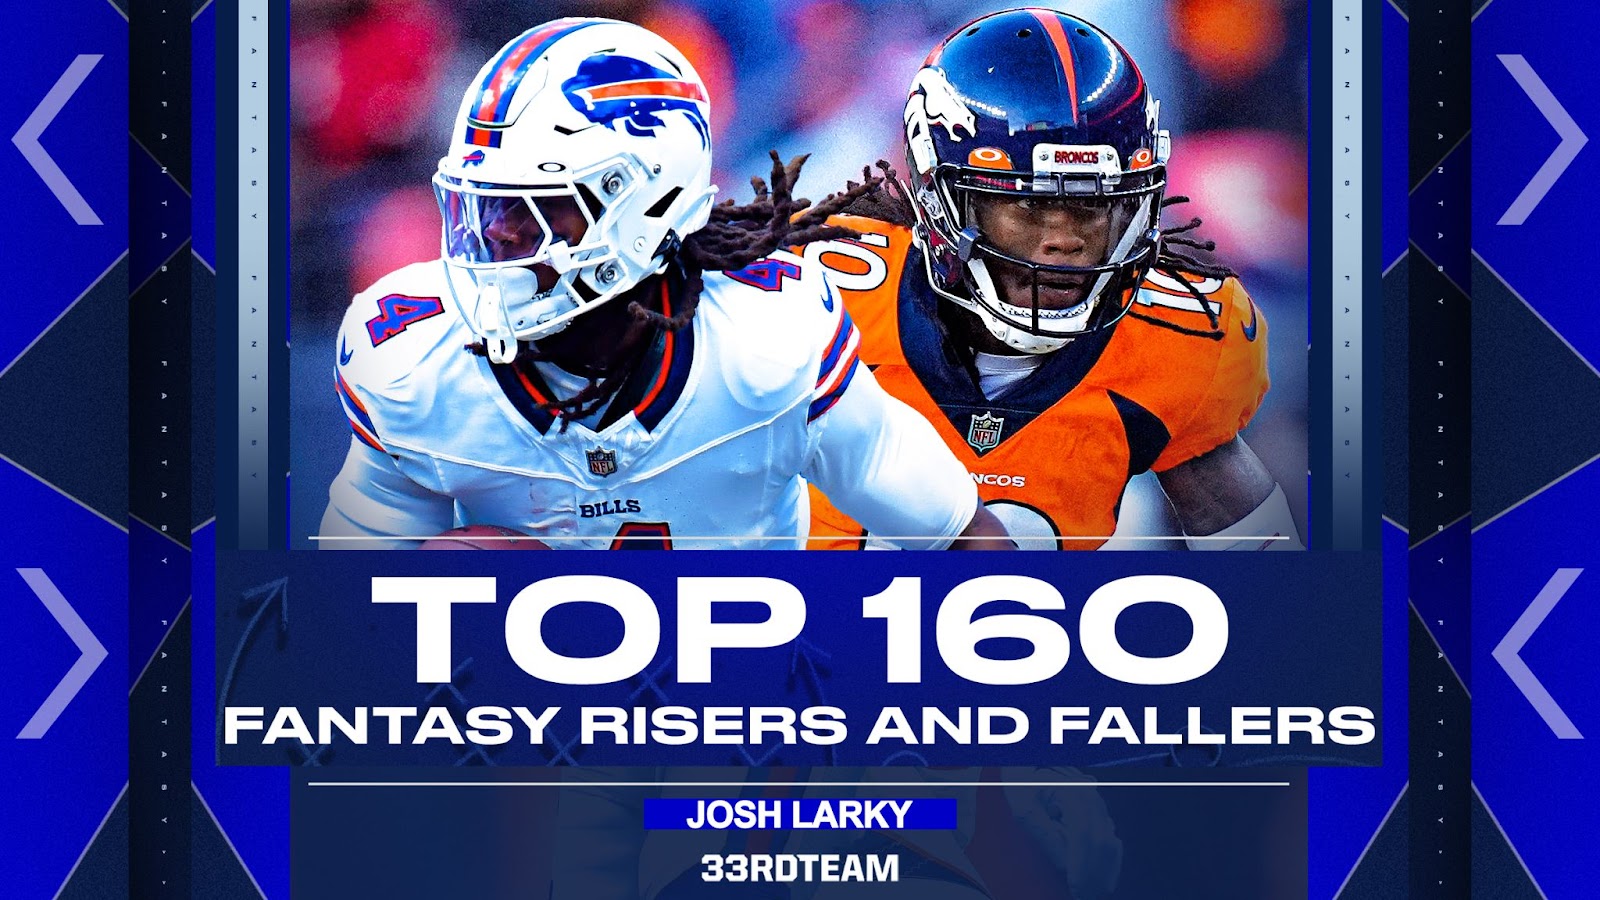 Top 160 Fantasy Football Rankings Preseason Risers, Fallers